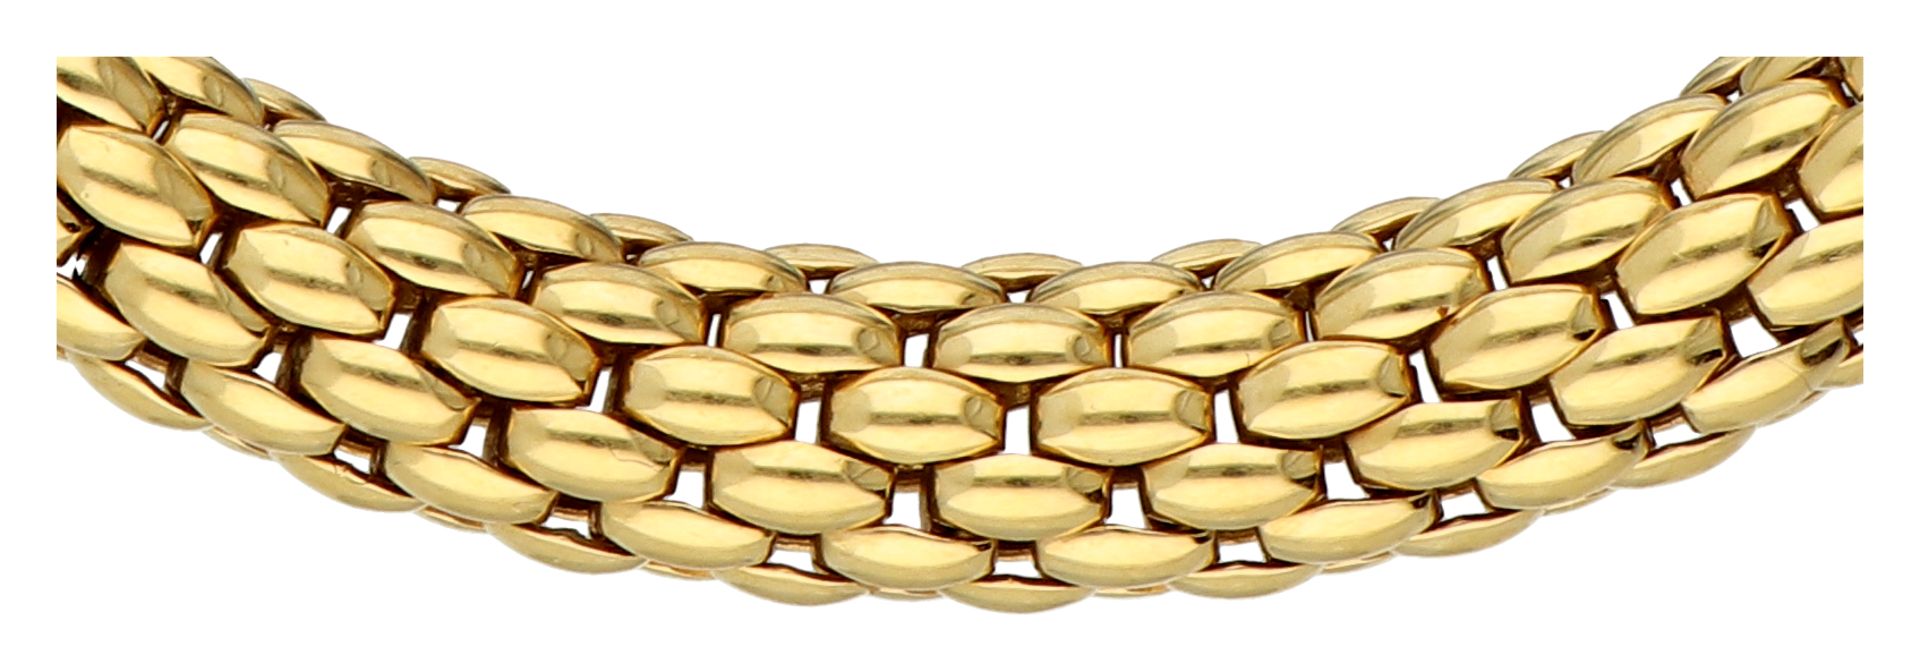 No Reserve - Fope 18K yellow gold mesh bracelet - Image 2 of 4